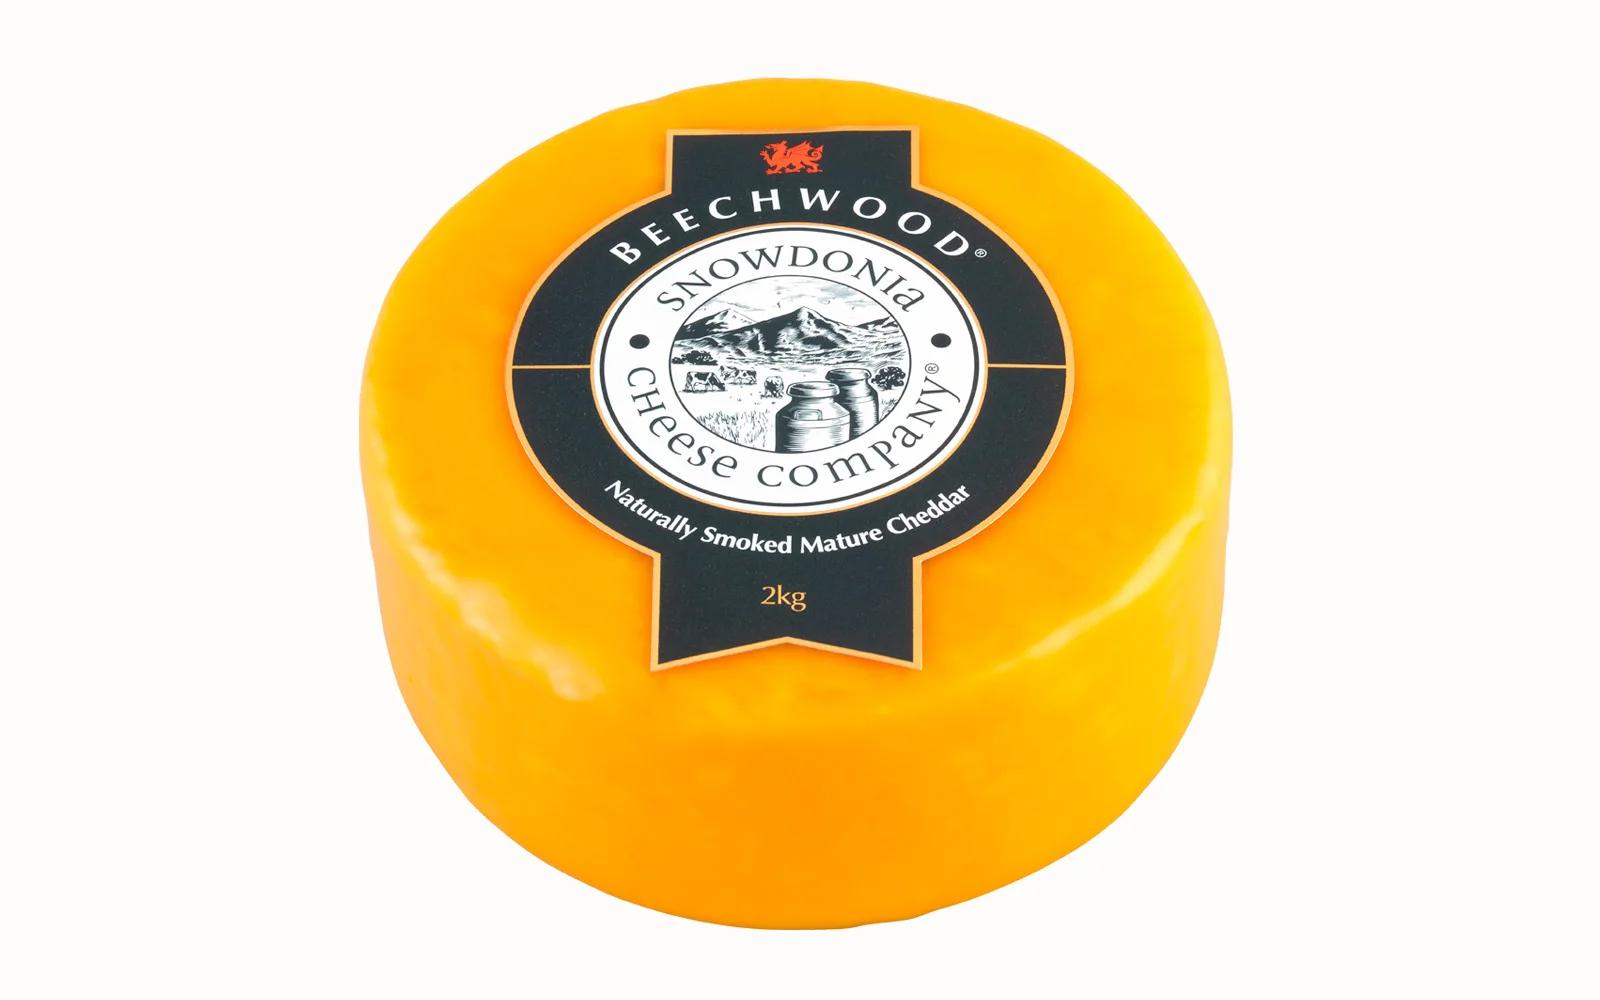 snowdonia smoked cheese - What does Snowdonia cheese taste like